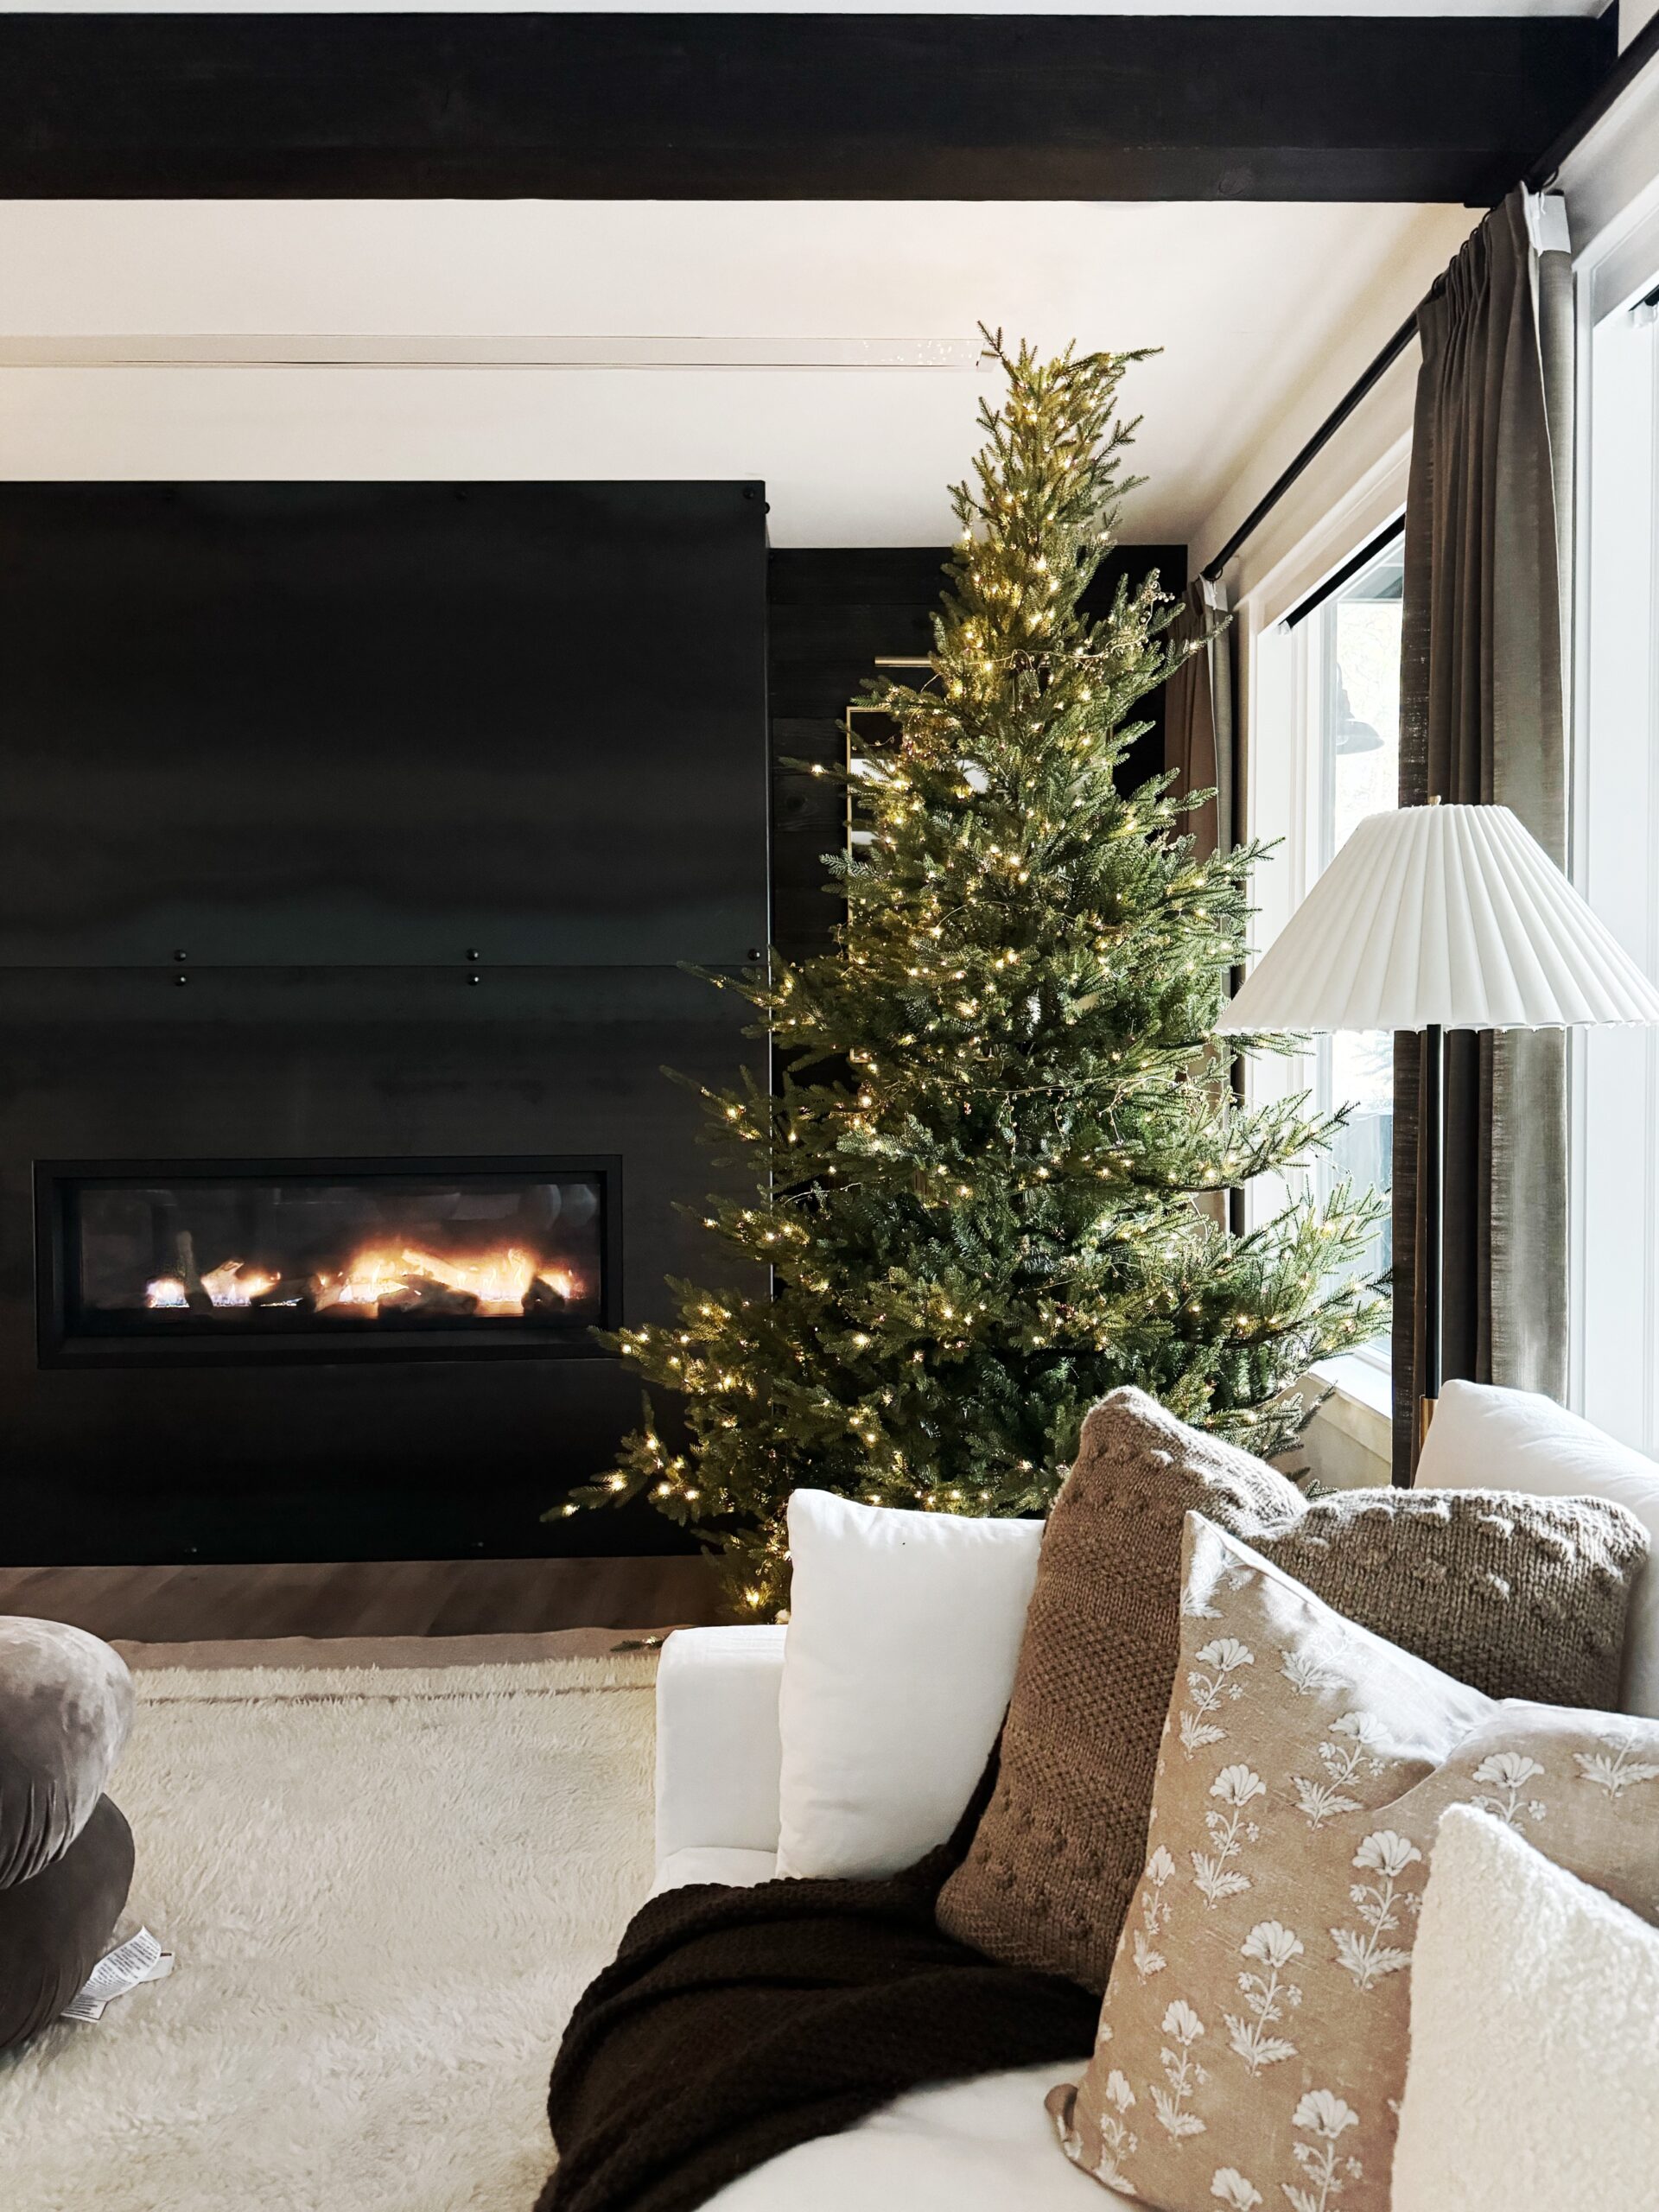 Christmas Trees in My Home | #christmas #christmastree #home #holiday #holidaydecor #seasonaldecor #home #home #homedecor #floorlamp #rug #sofa #pillow #throwpillow #fireplace #basement